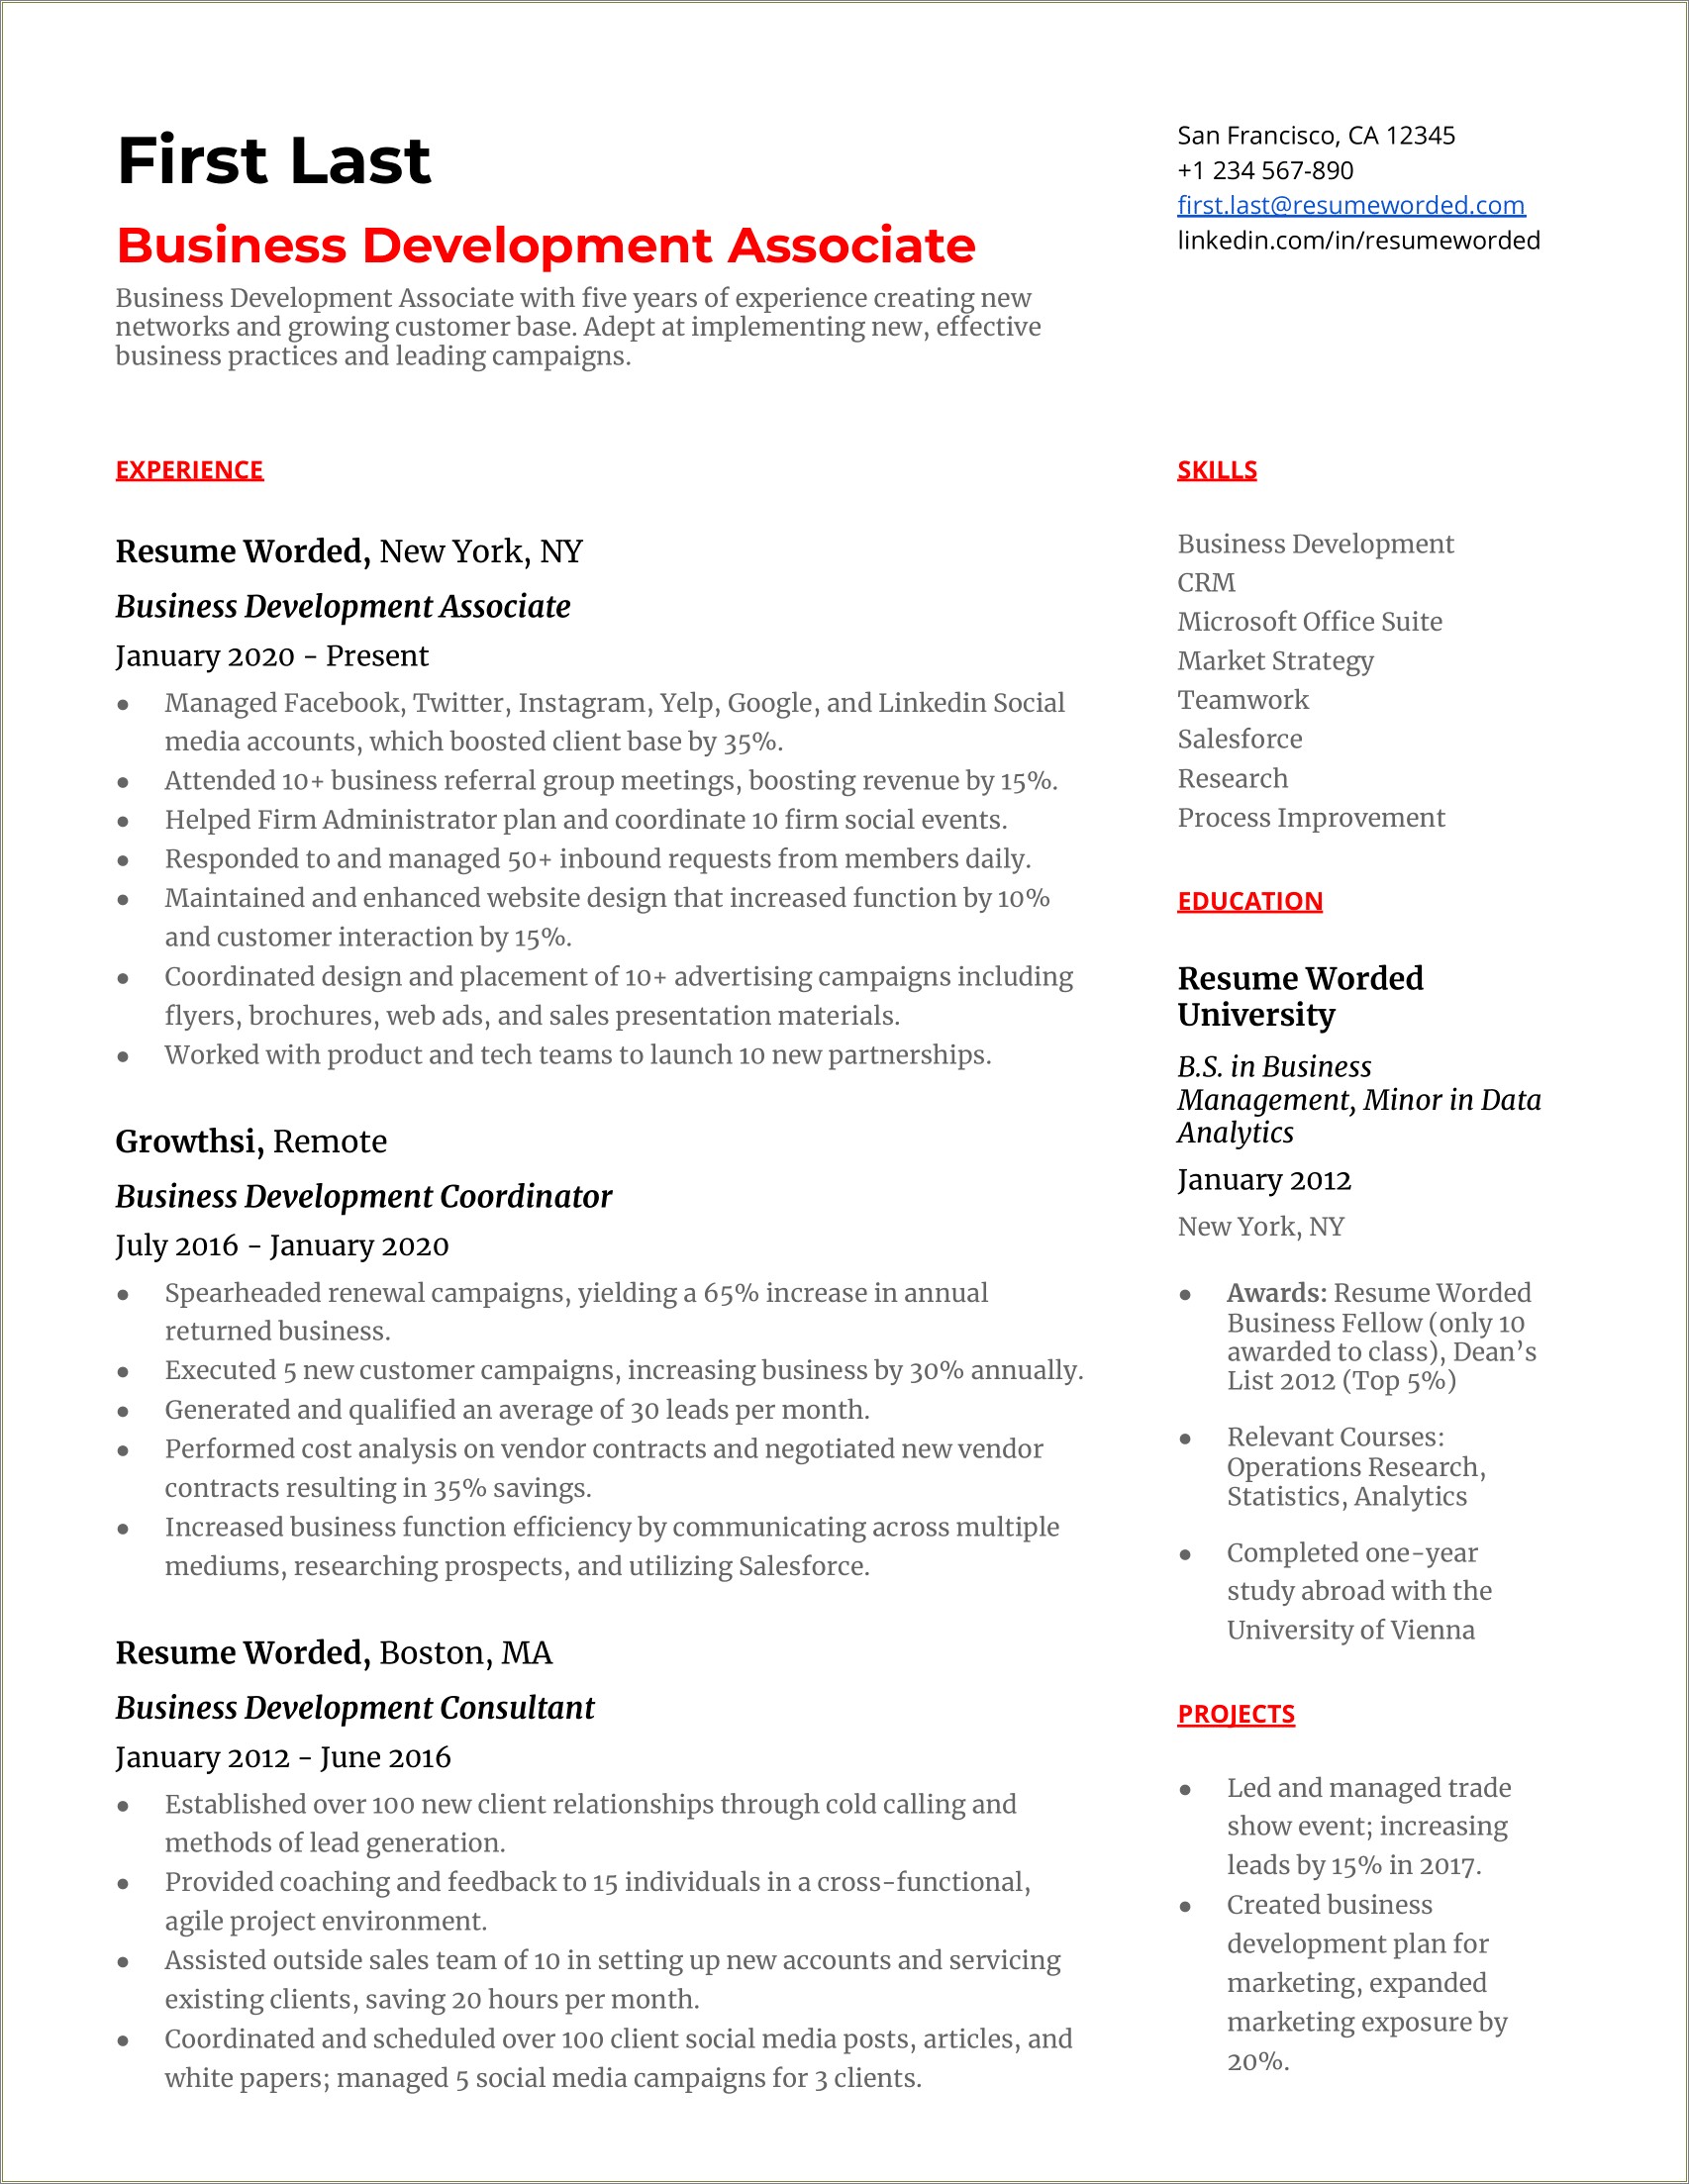 Business Development Associate Job Description Resume